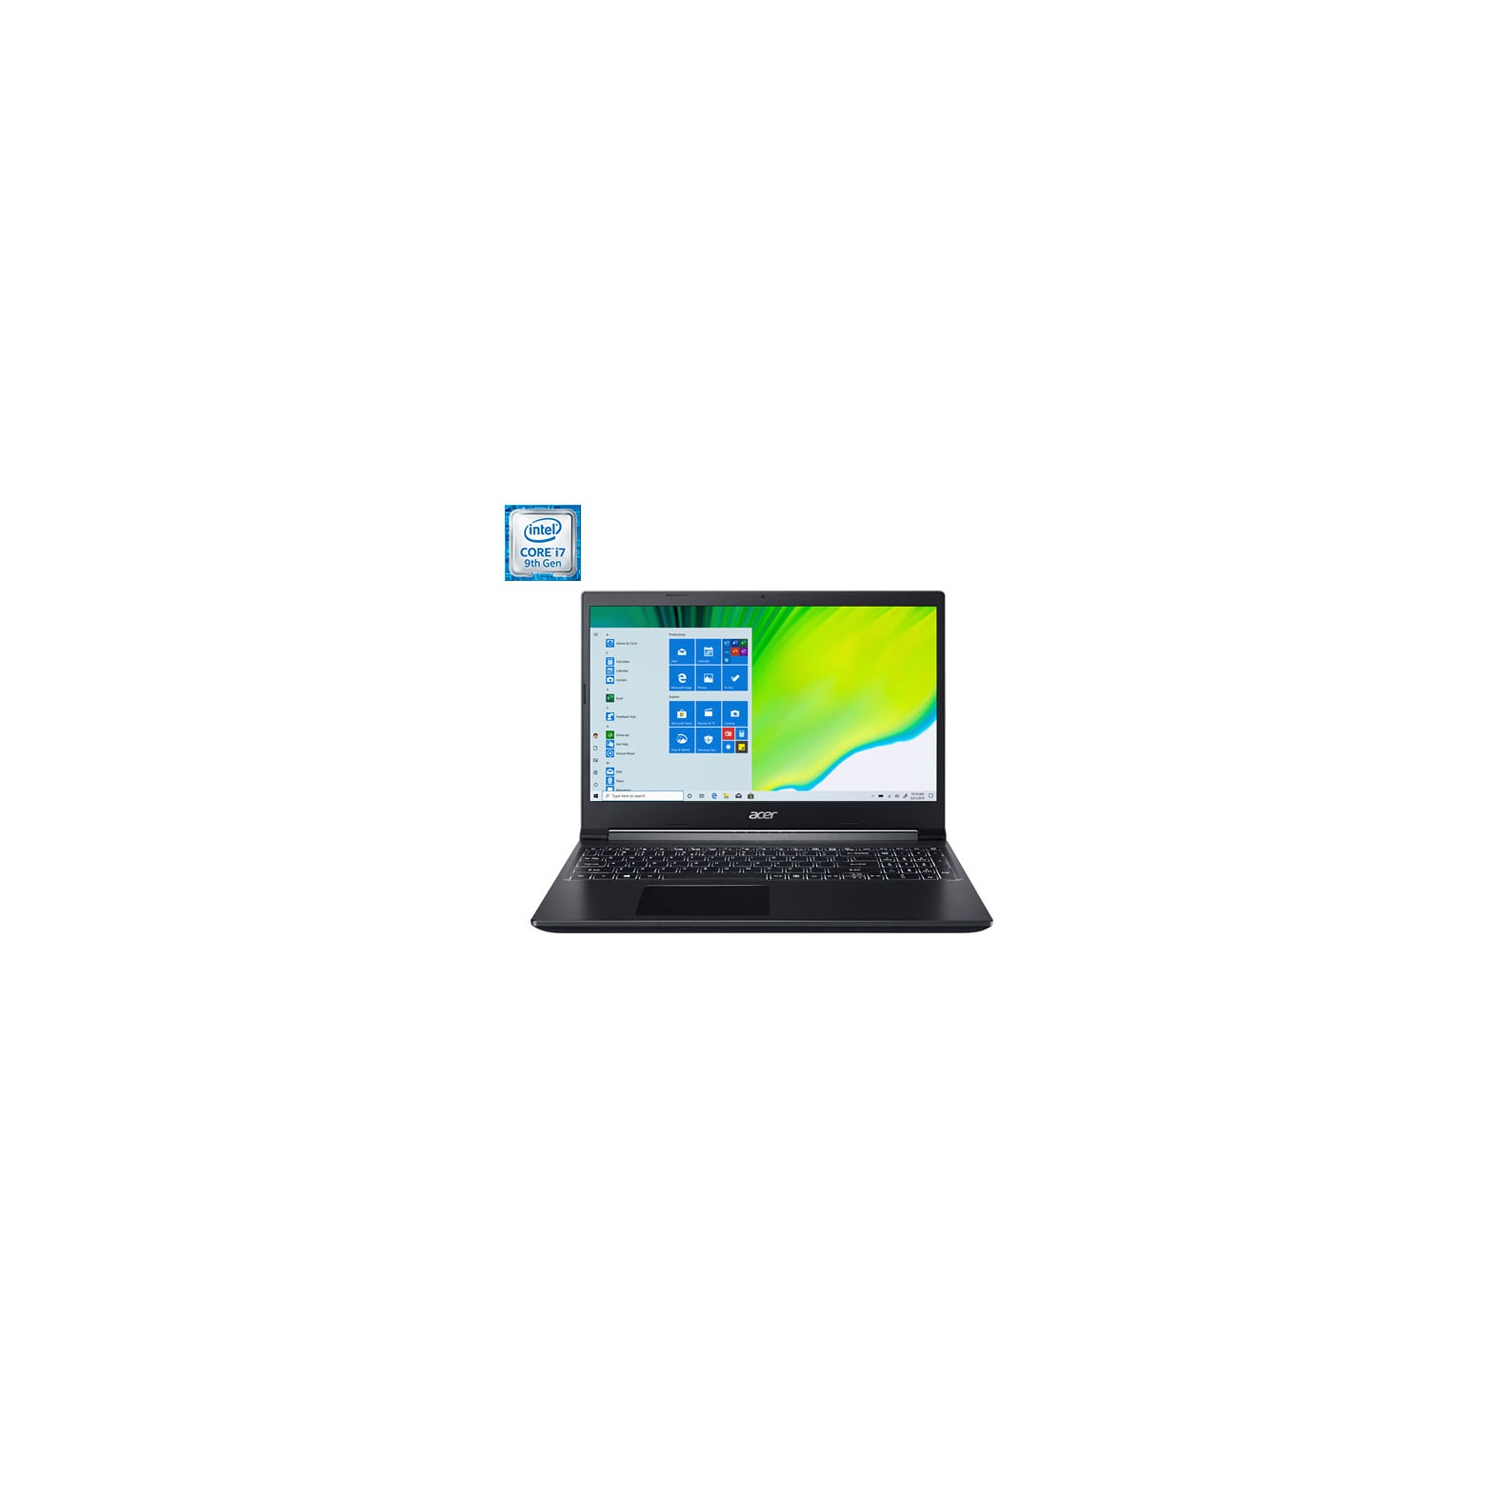 Refurbished (Good) - Acer Aspire 7 15.6" Gaming Laptop - Black (Intel Core i7-9750H/512GB SSD/16GB RAM/NVIDIA GTX 1650)